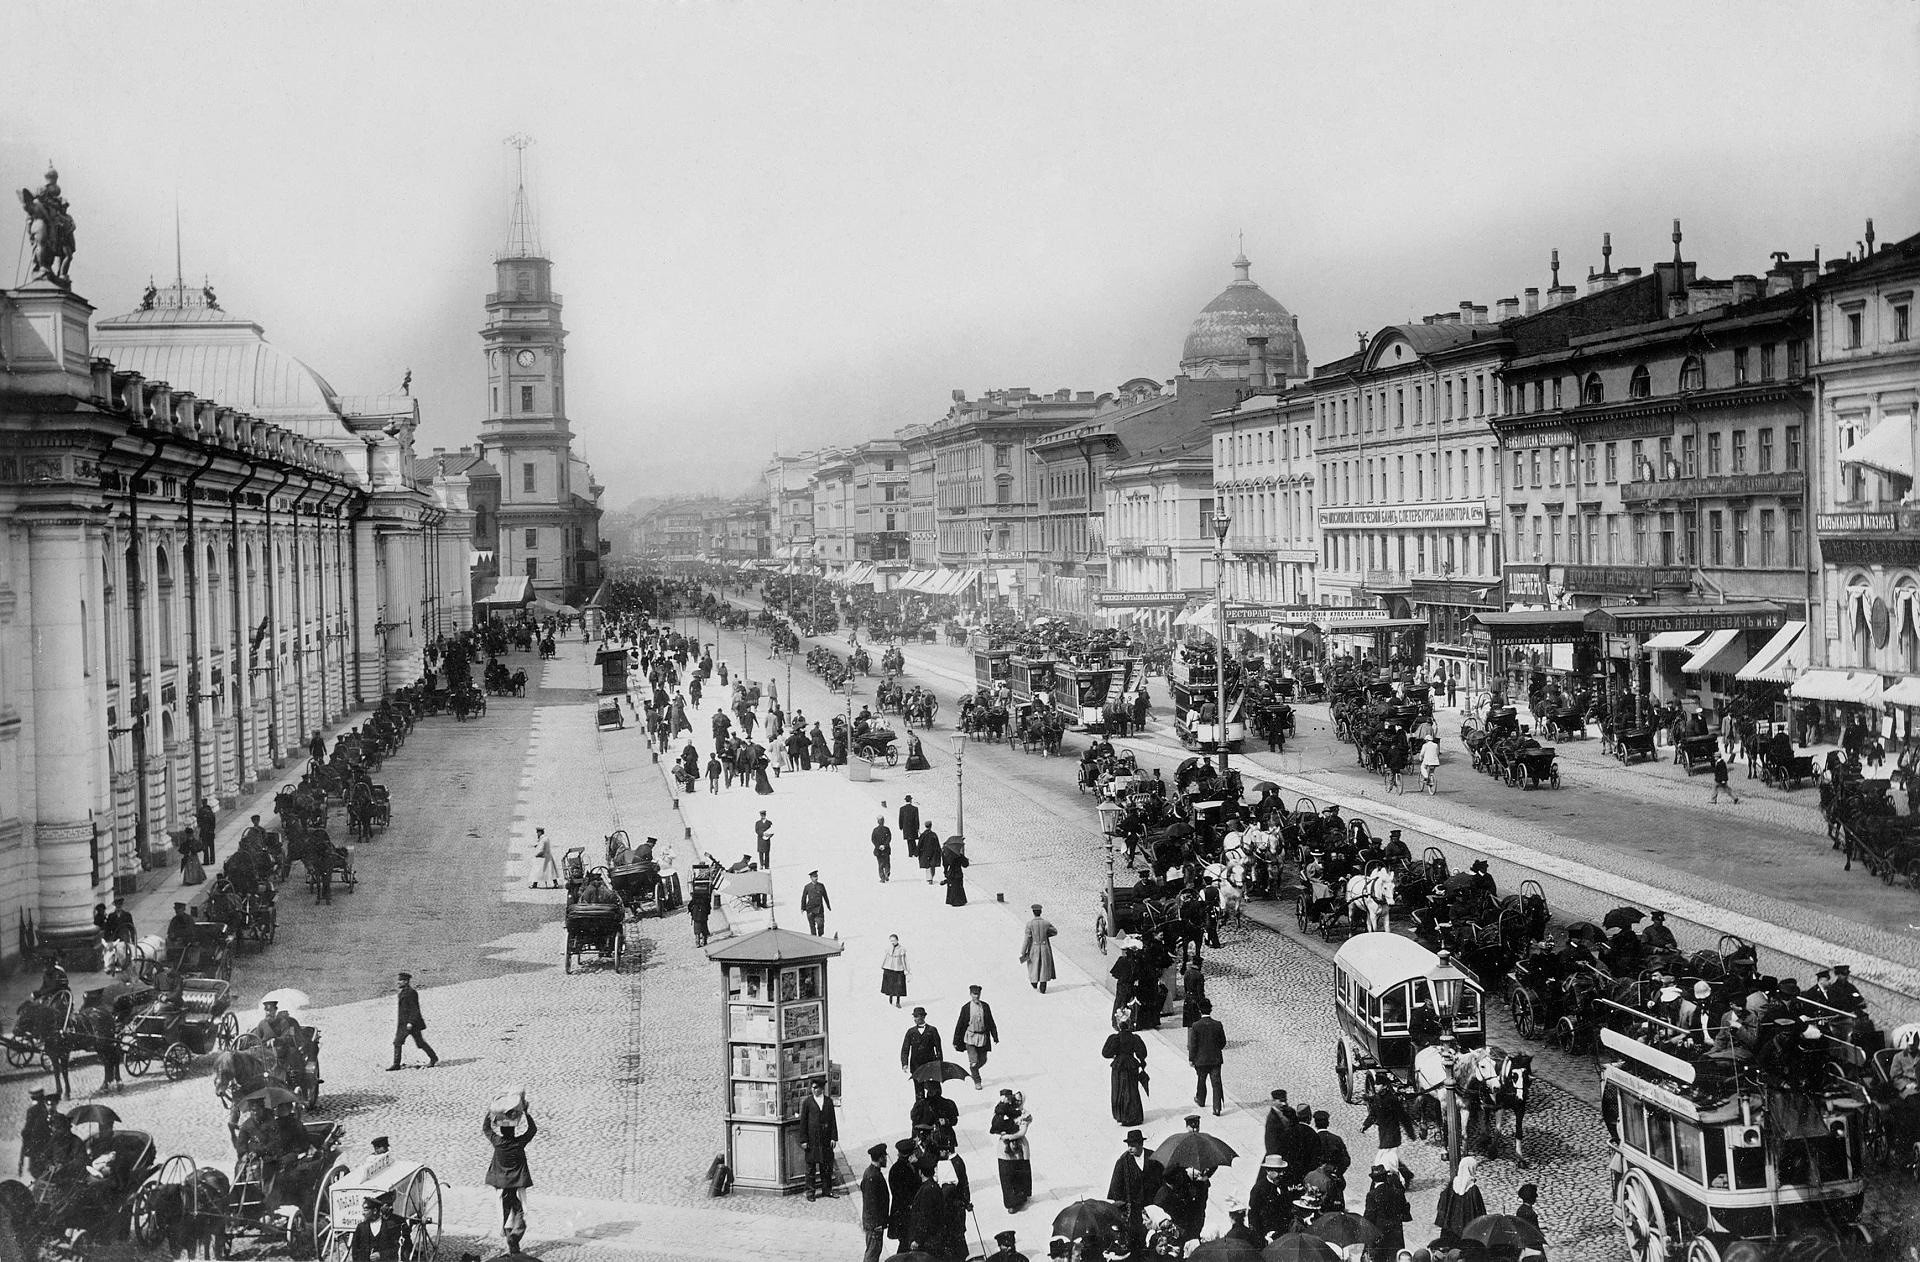 St. Petersburg in late 19th century